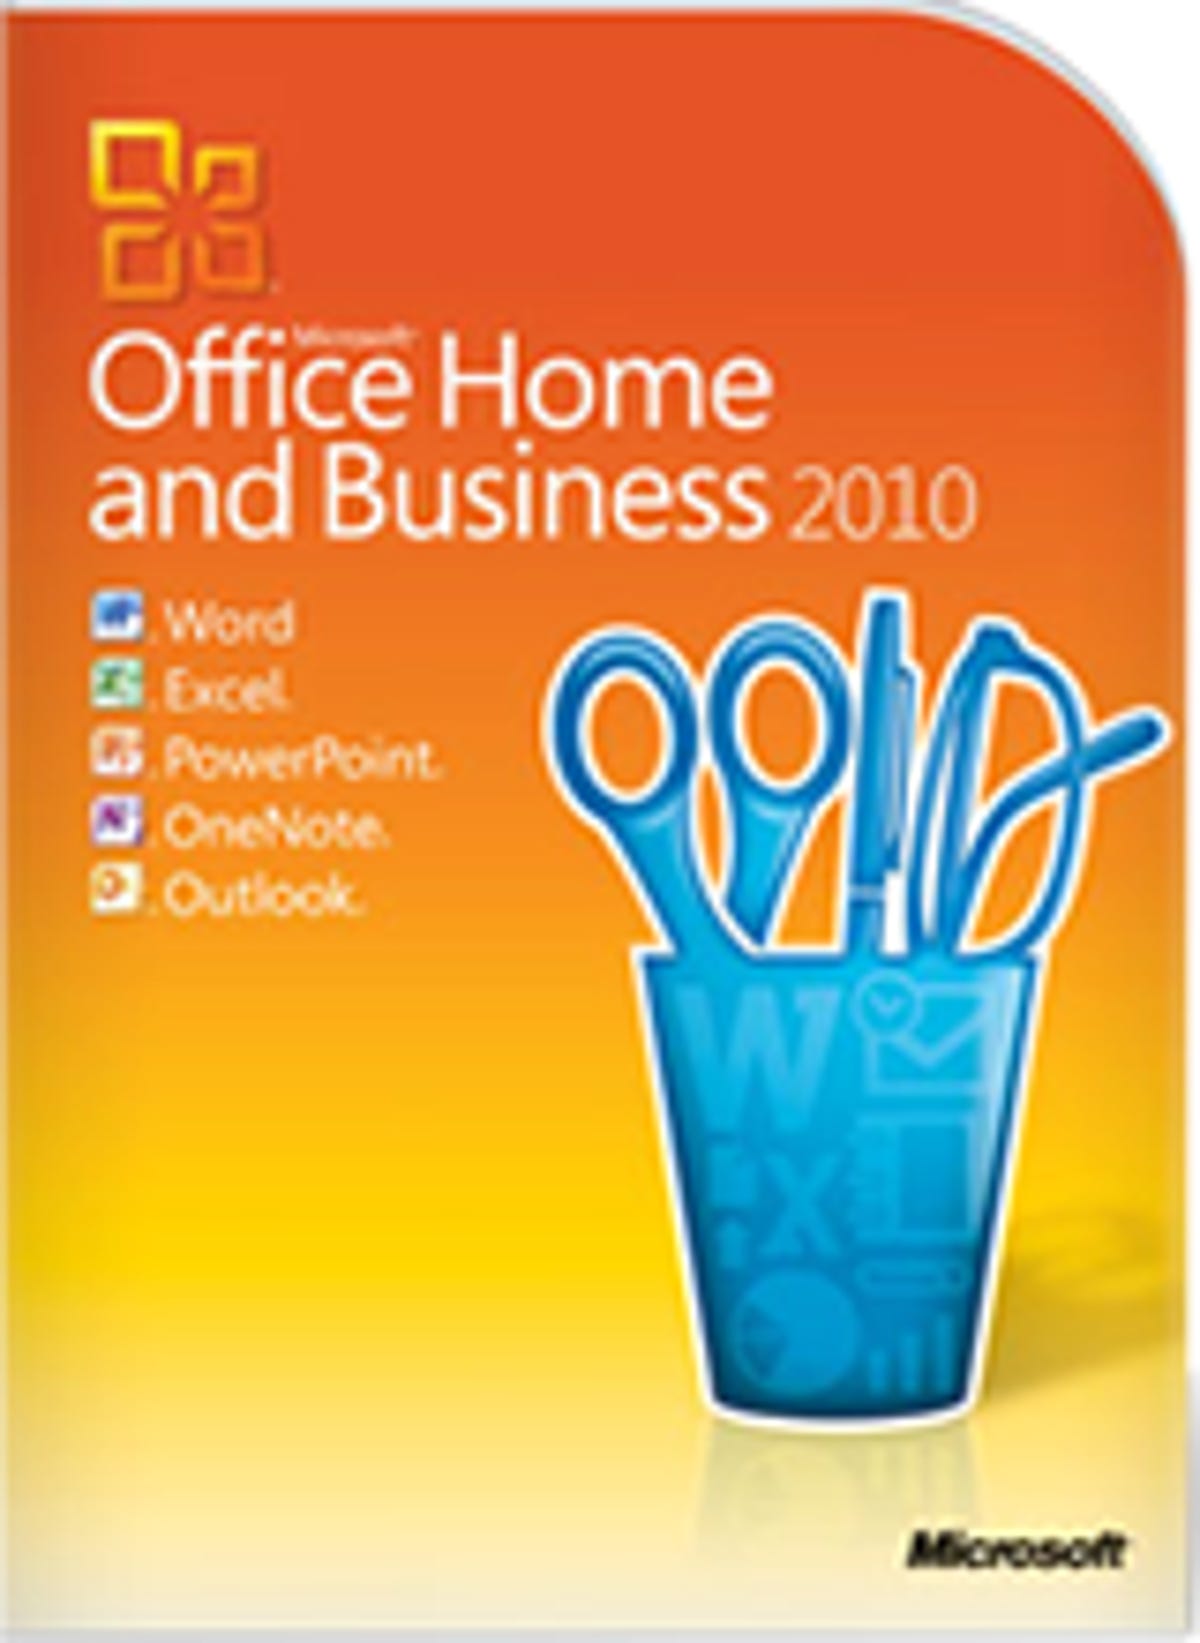 Microsoft Office 2010 beta will expire on Halloween.